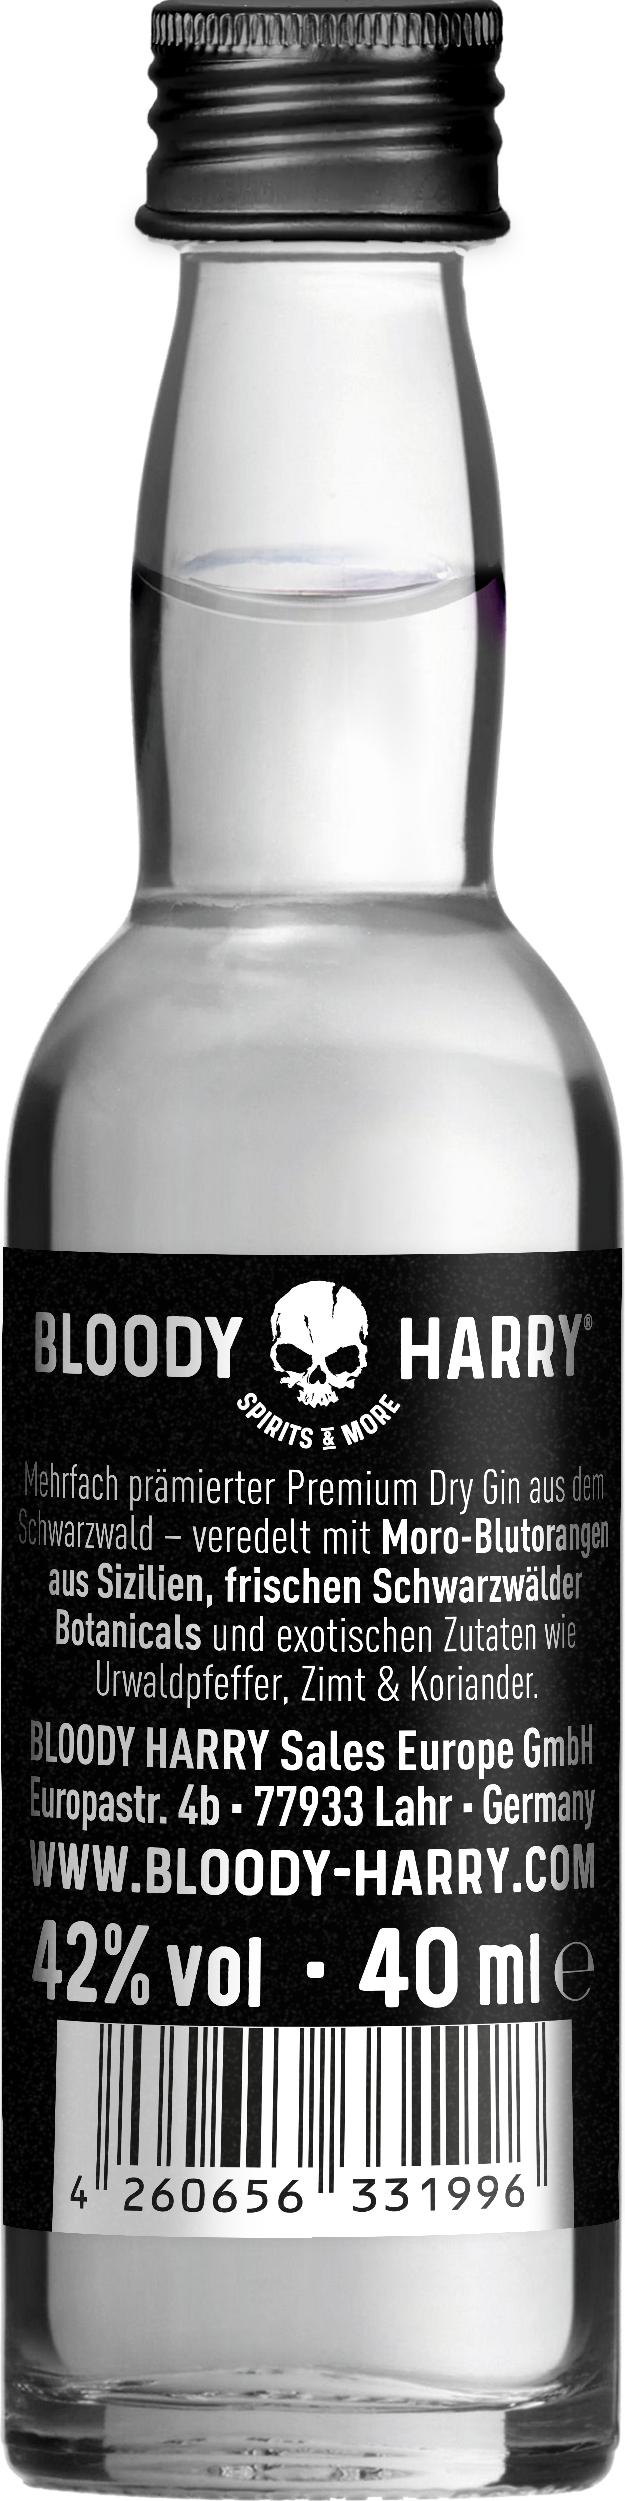 Bloody Harry Premium Dry Gin, 44%vol.